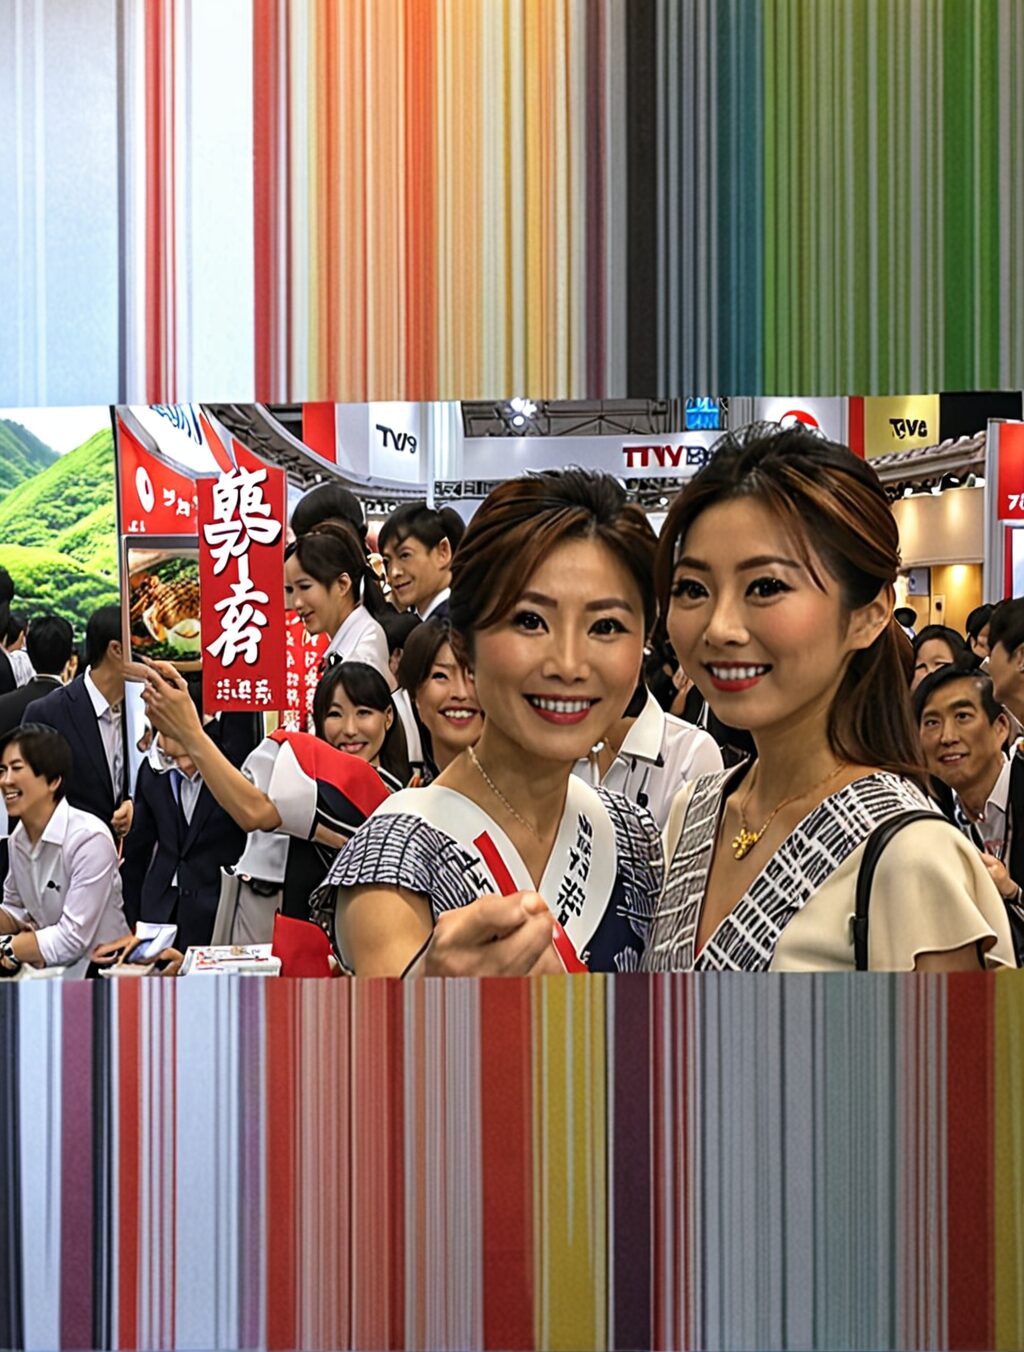 tvb japan travel show